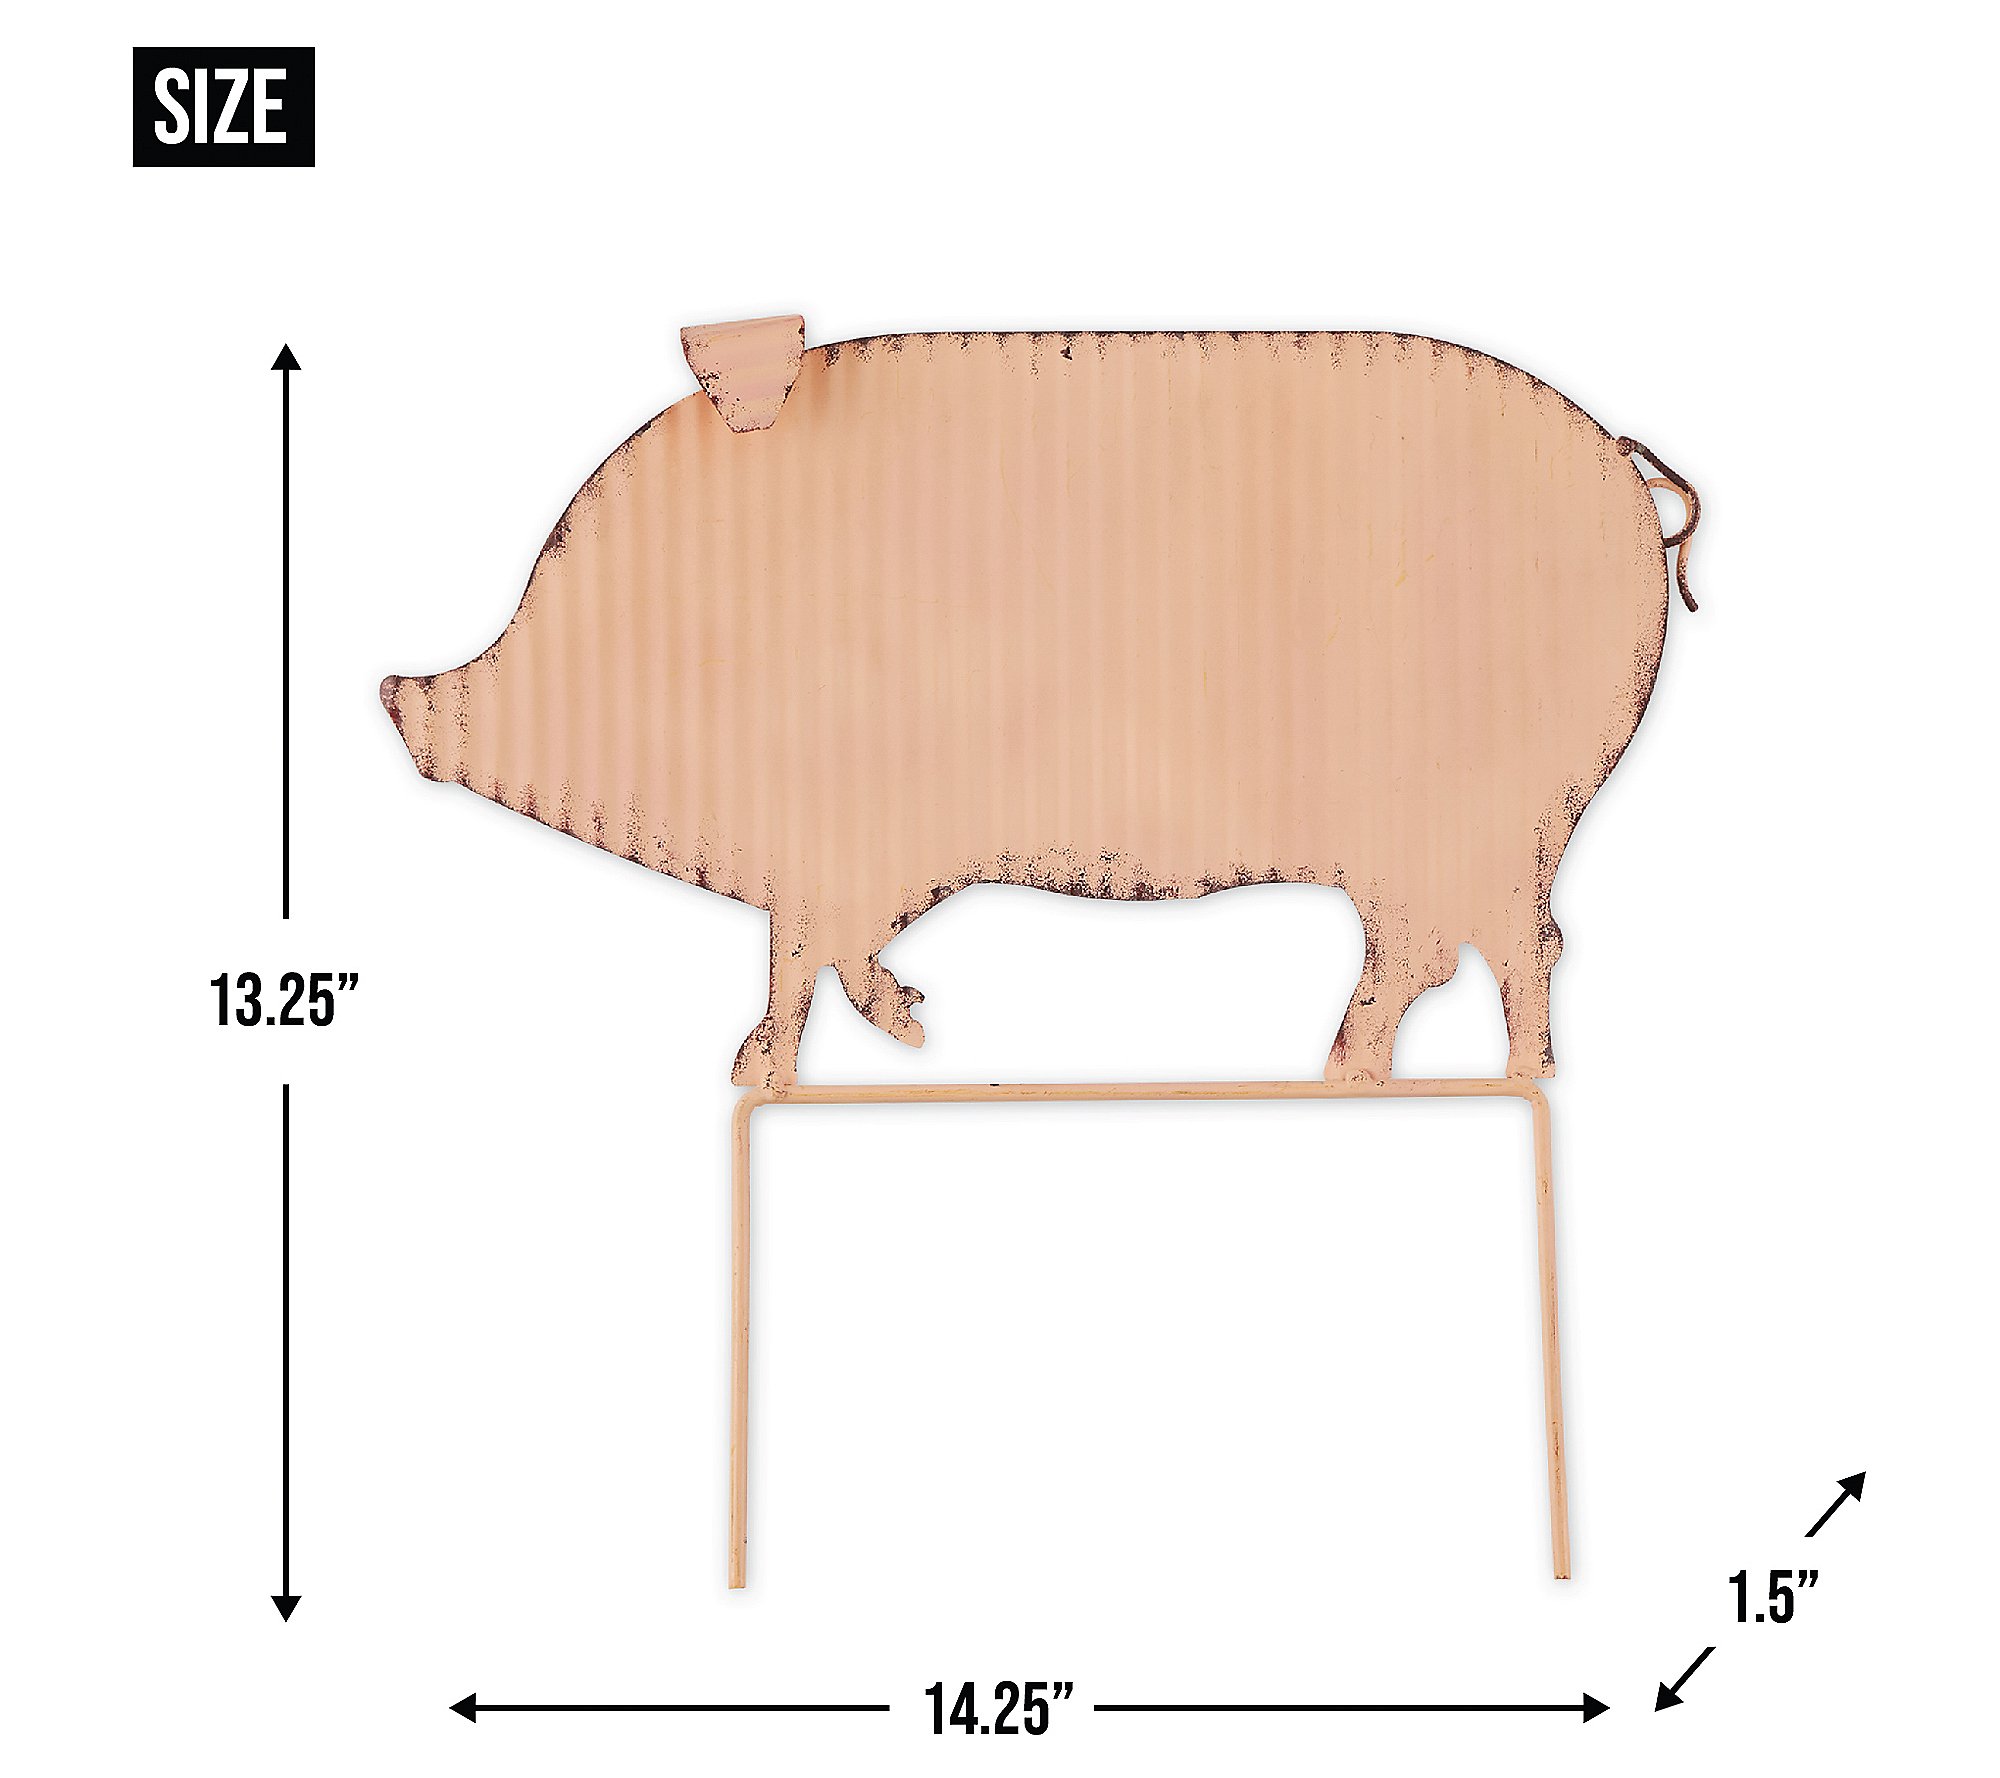 Design Imports Pig Garden Stake